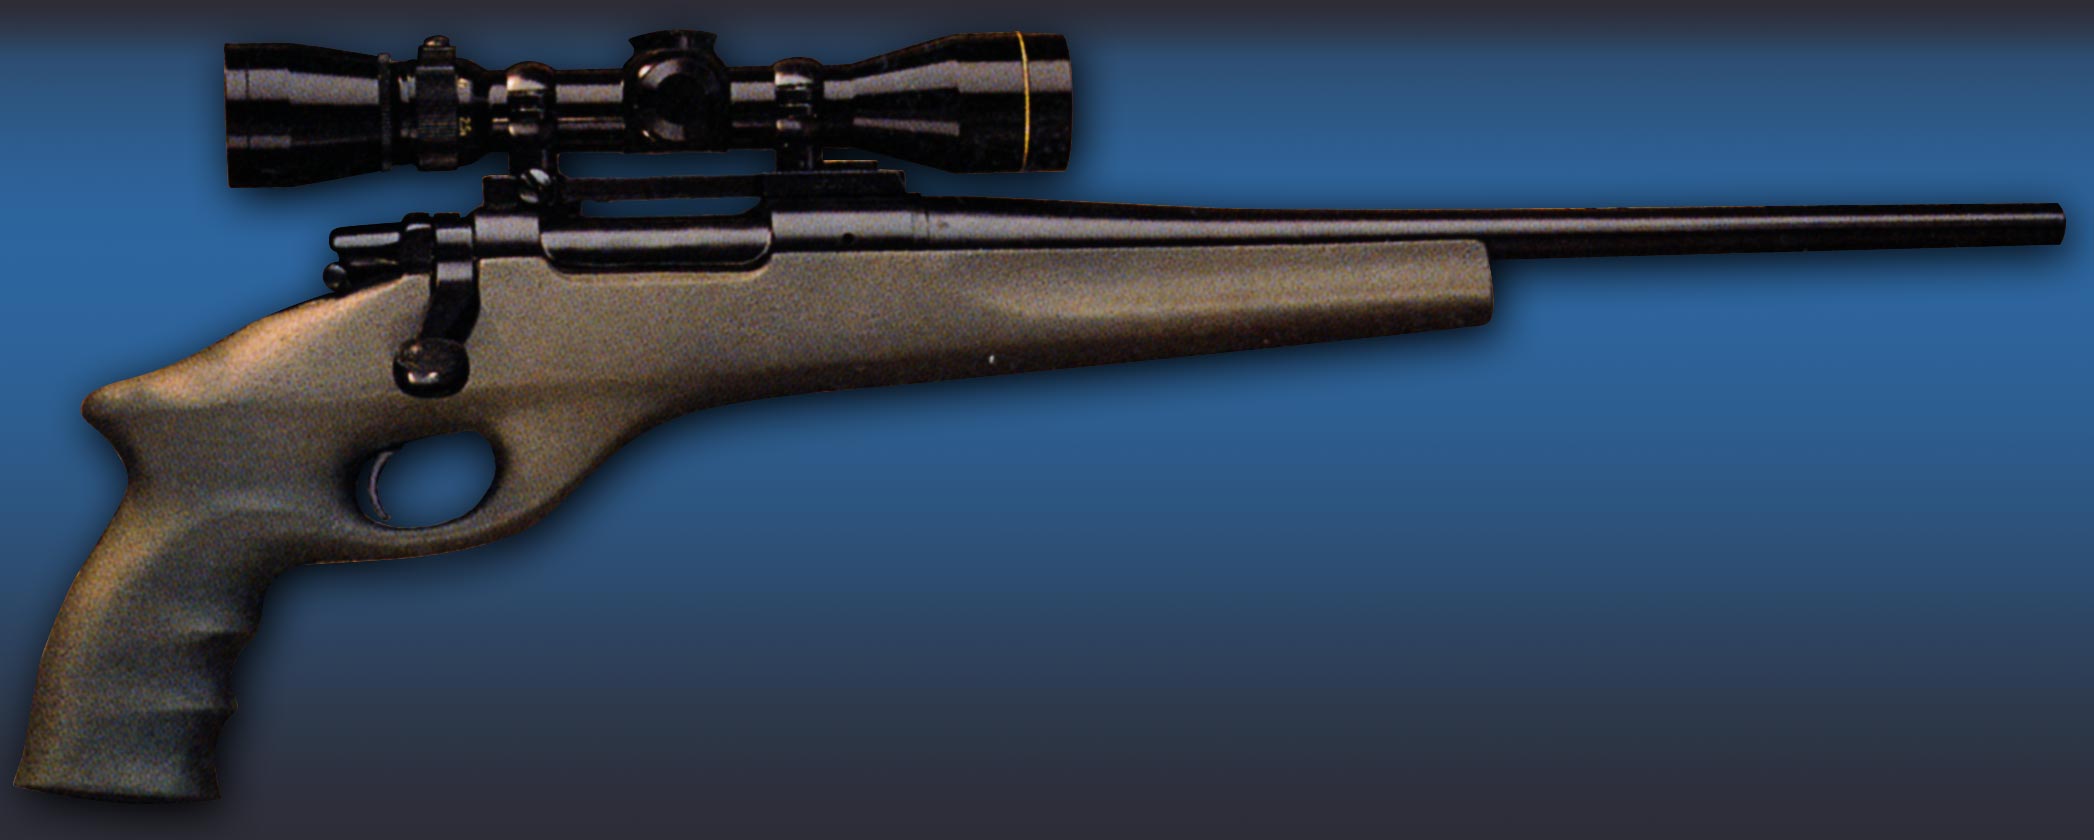 Remington Pistol #25